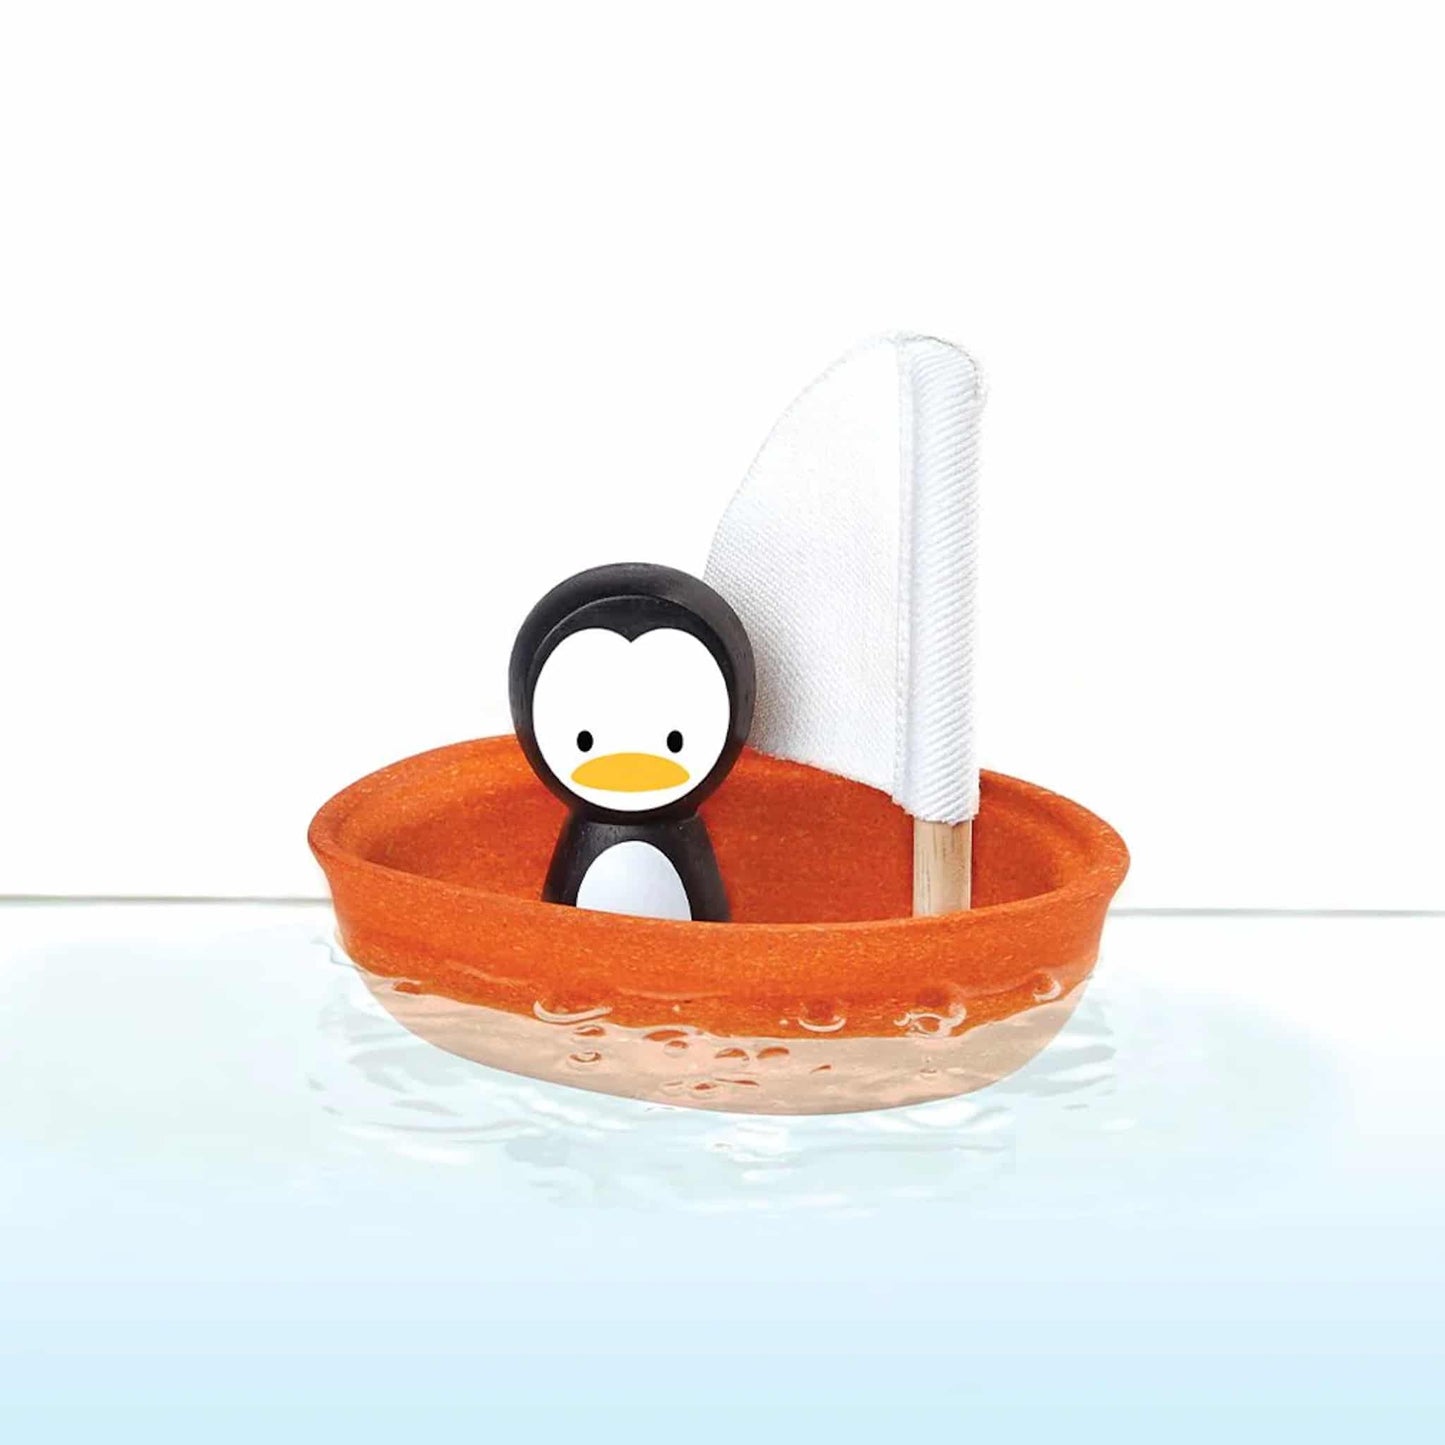 Plan Toys Penguin Sailing Boat